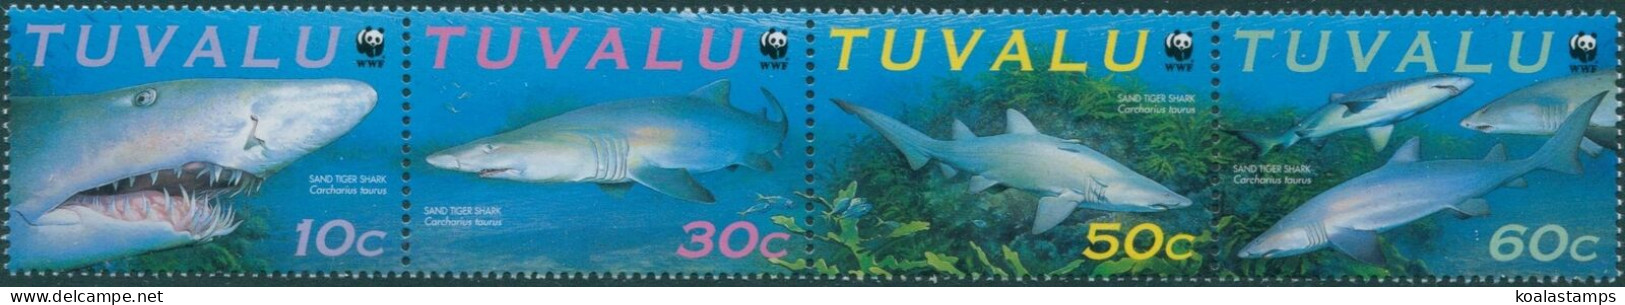 Tuvalu 2000 SG872a Sharks Strip MNH - Tuvalu